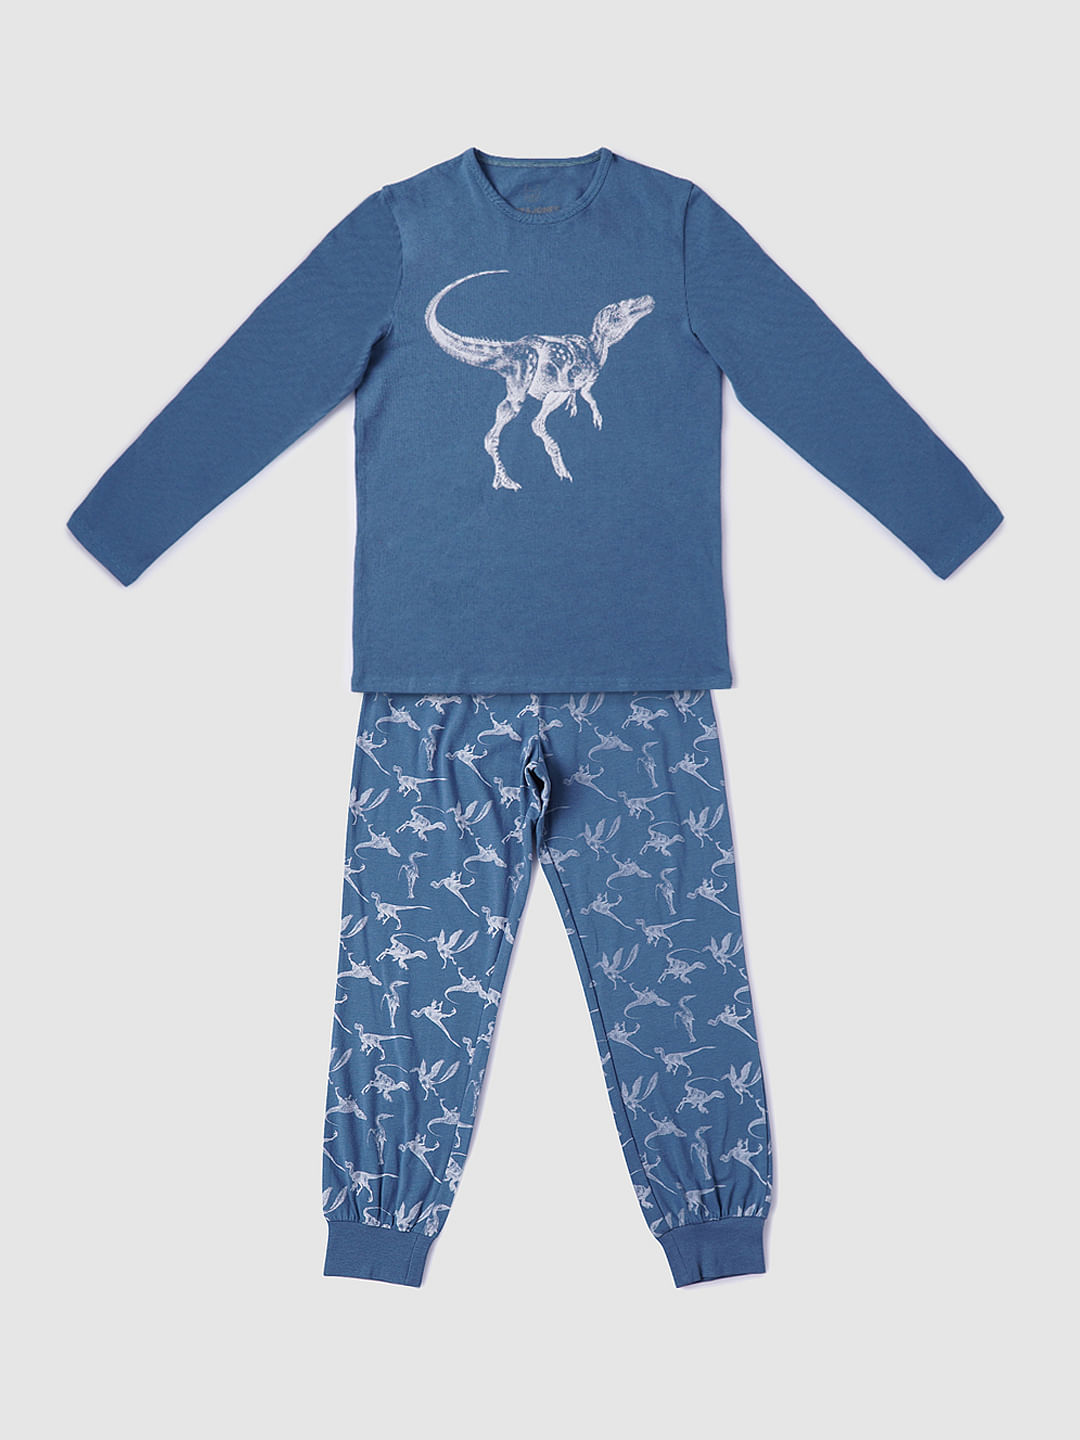 Buy Blue Printed T-shirt & Pyjama Night Suit Set for Boys Online 